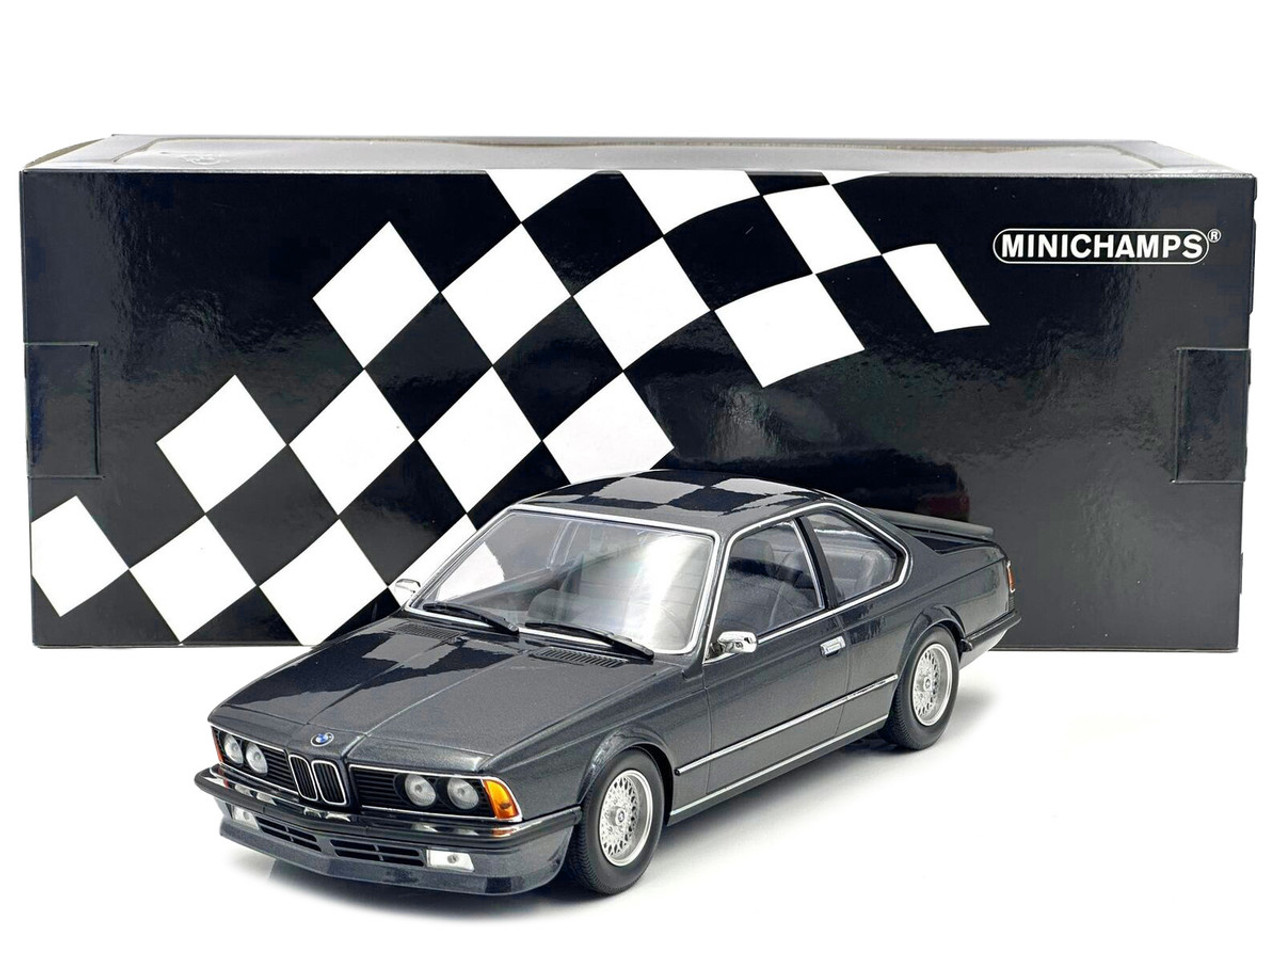 1/18 Minichamps 1982 BMW 635 CSi (Dark Grey Metallic) Car Model